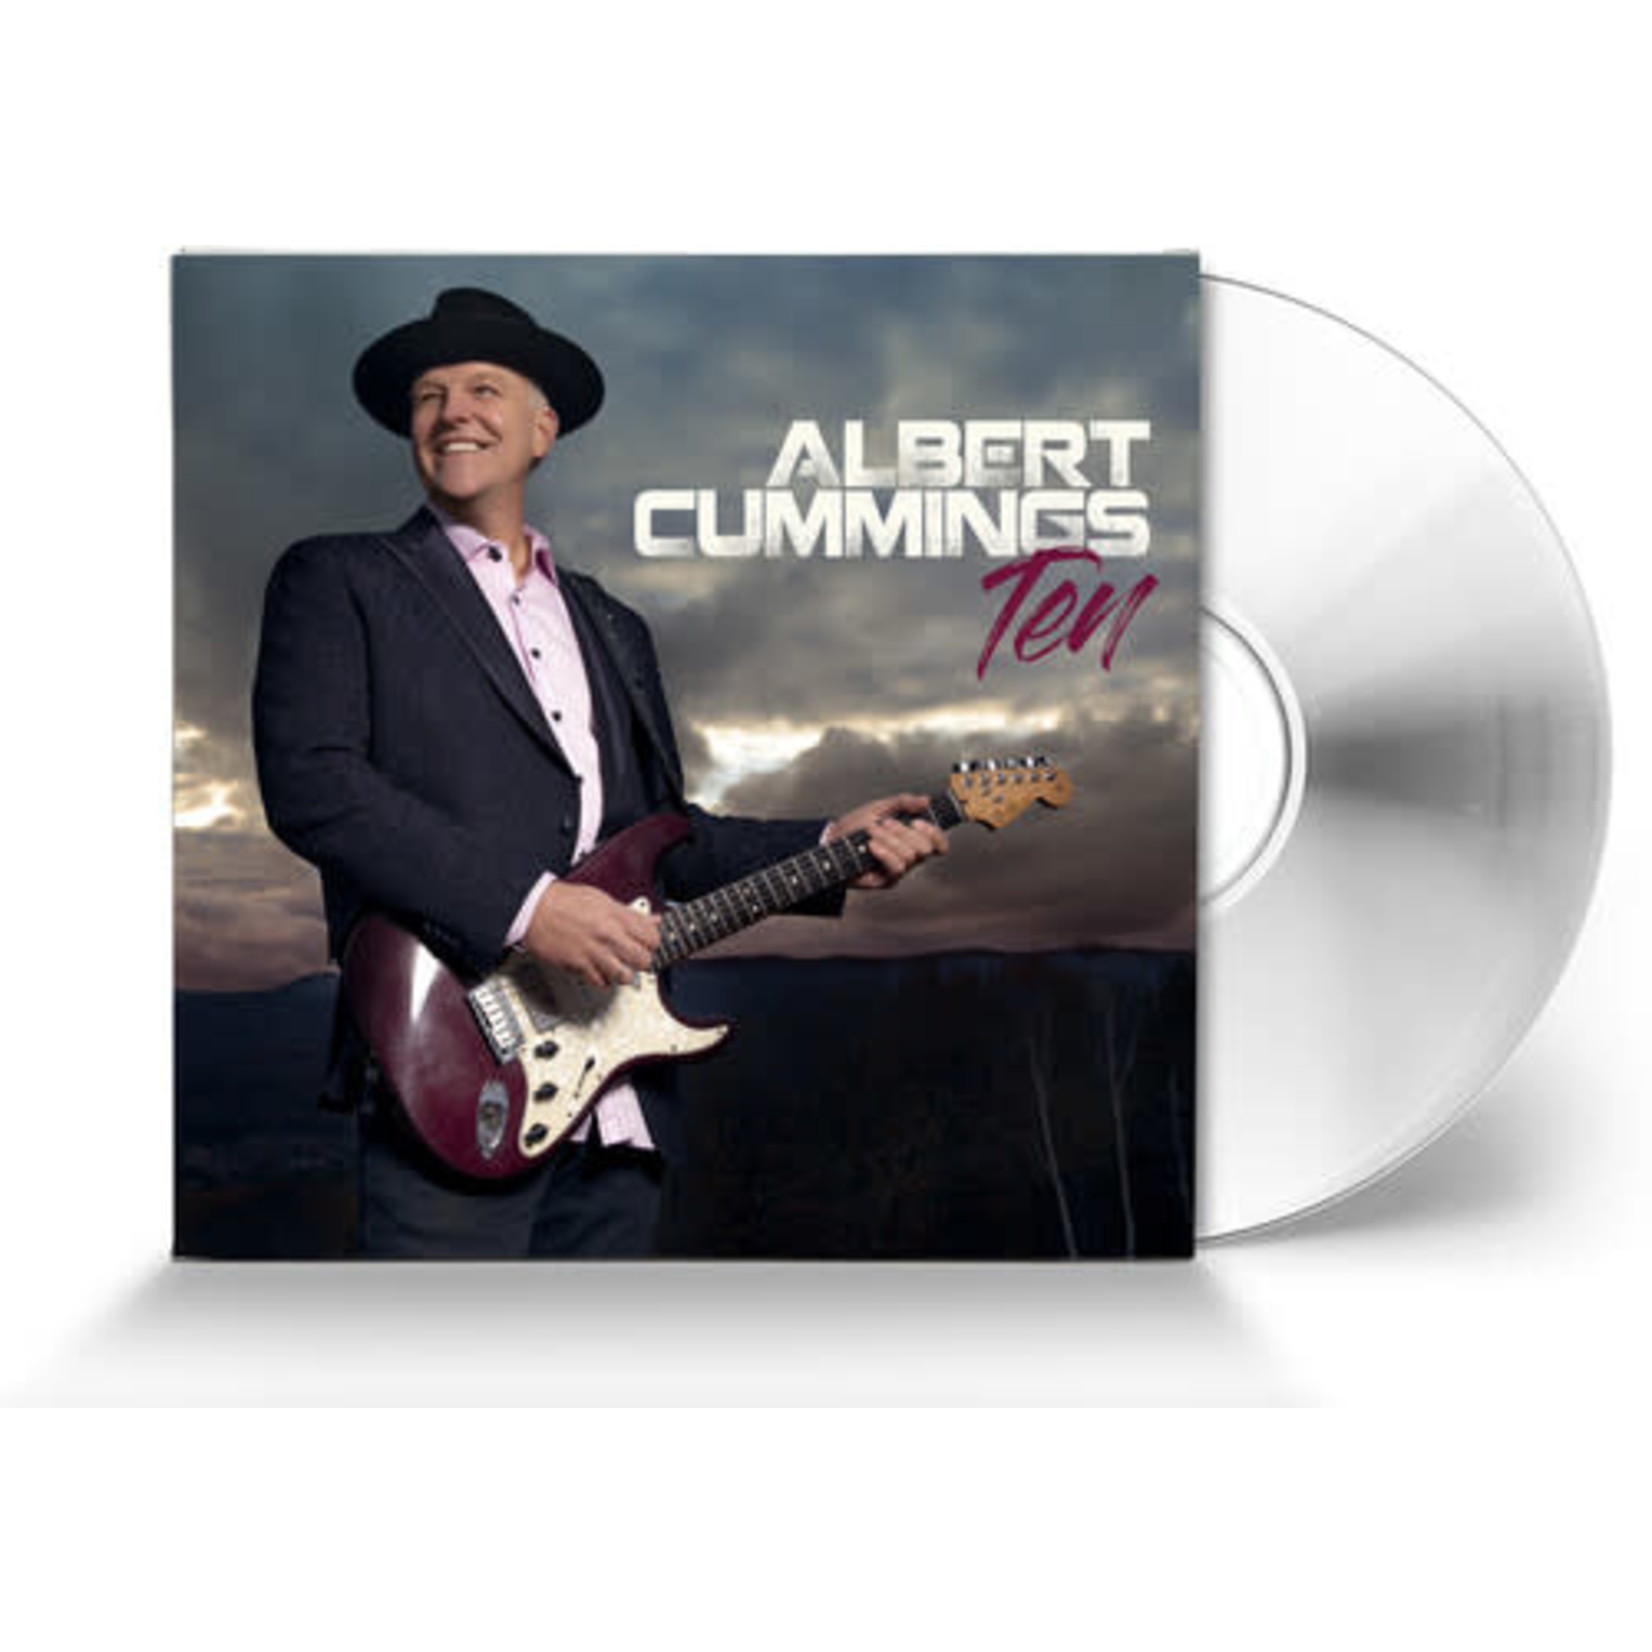 Albert Cummings - Ten [CD]